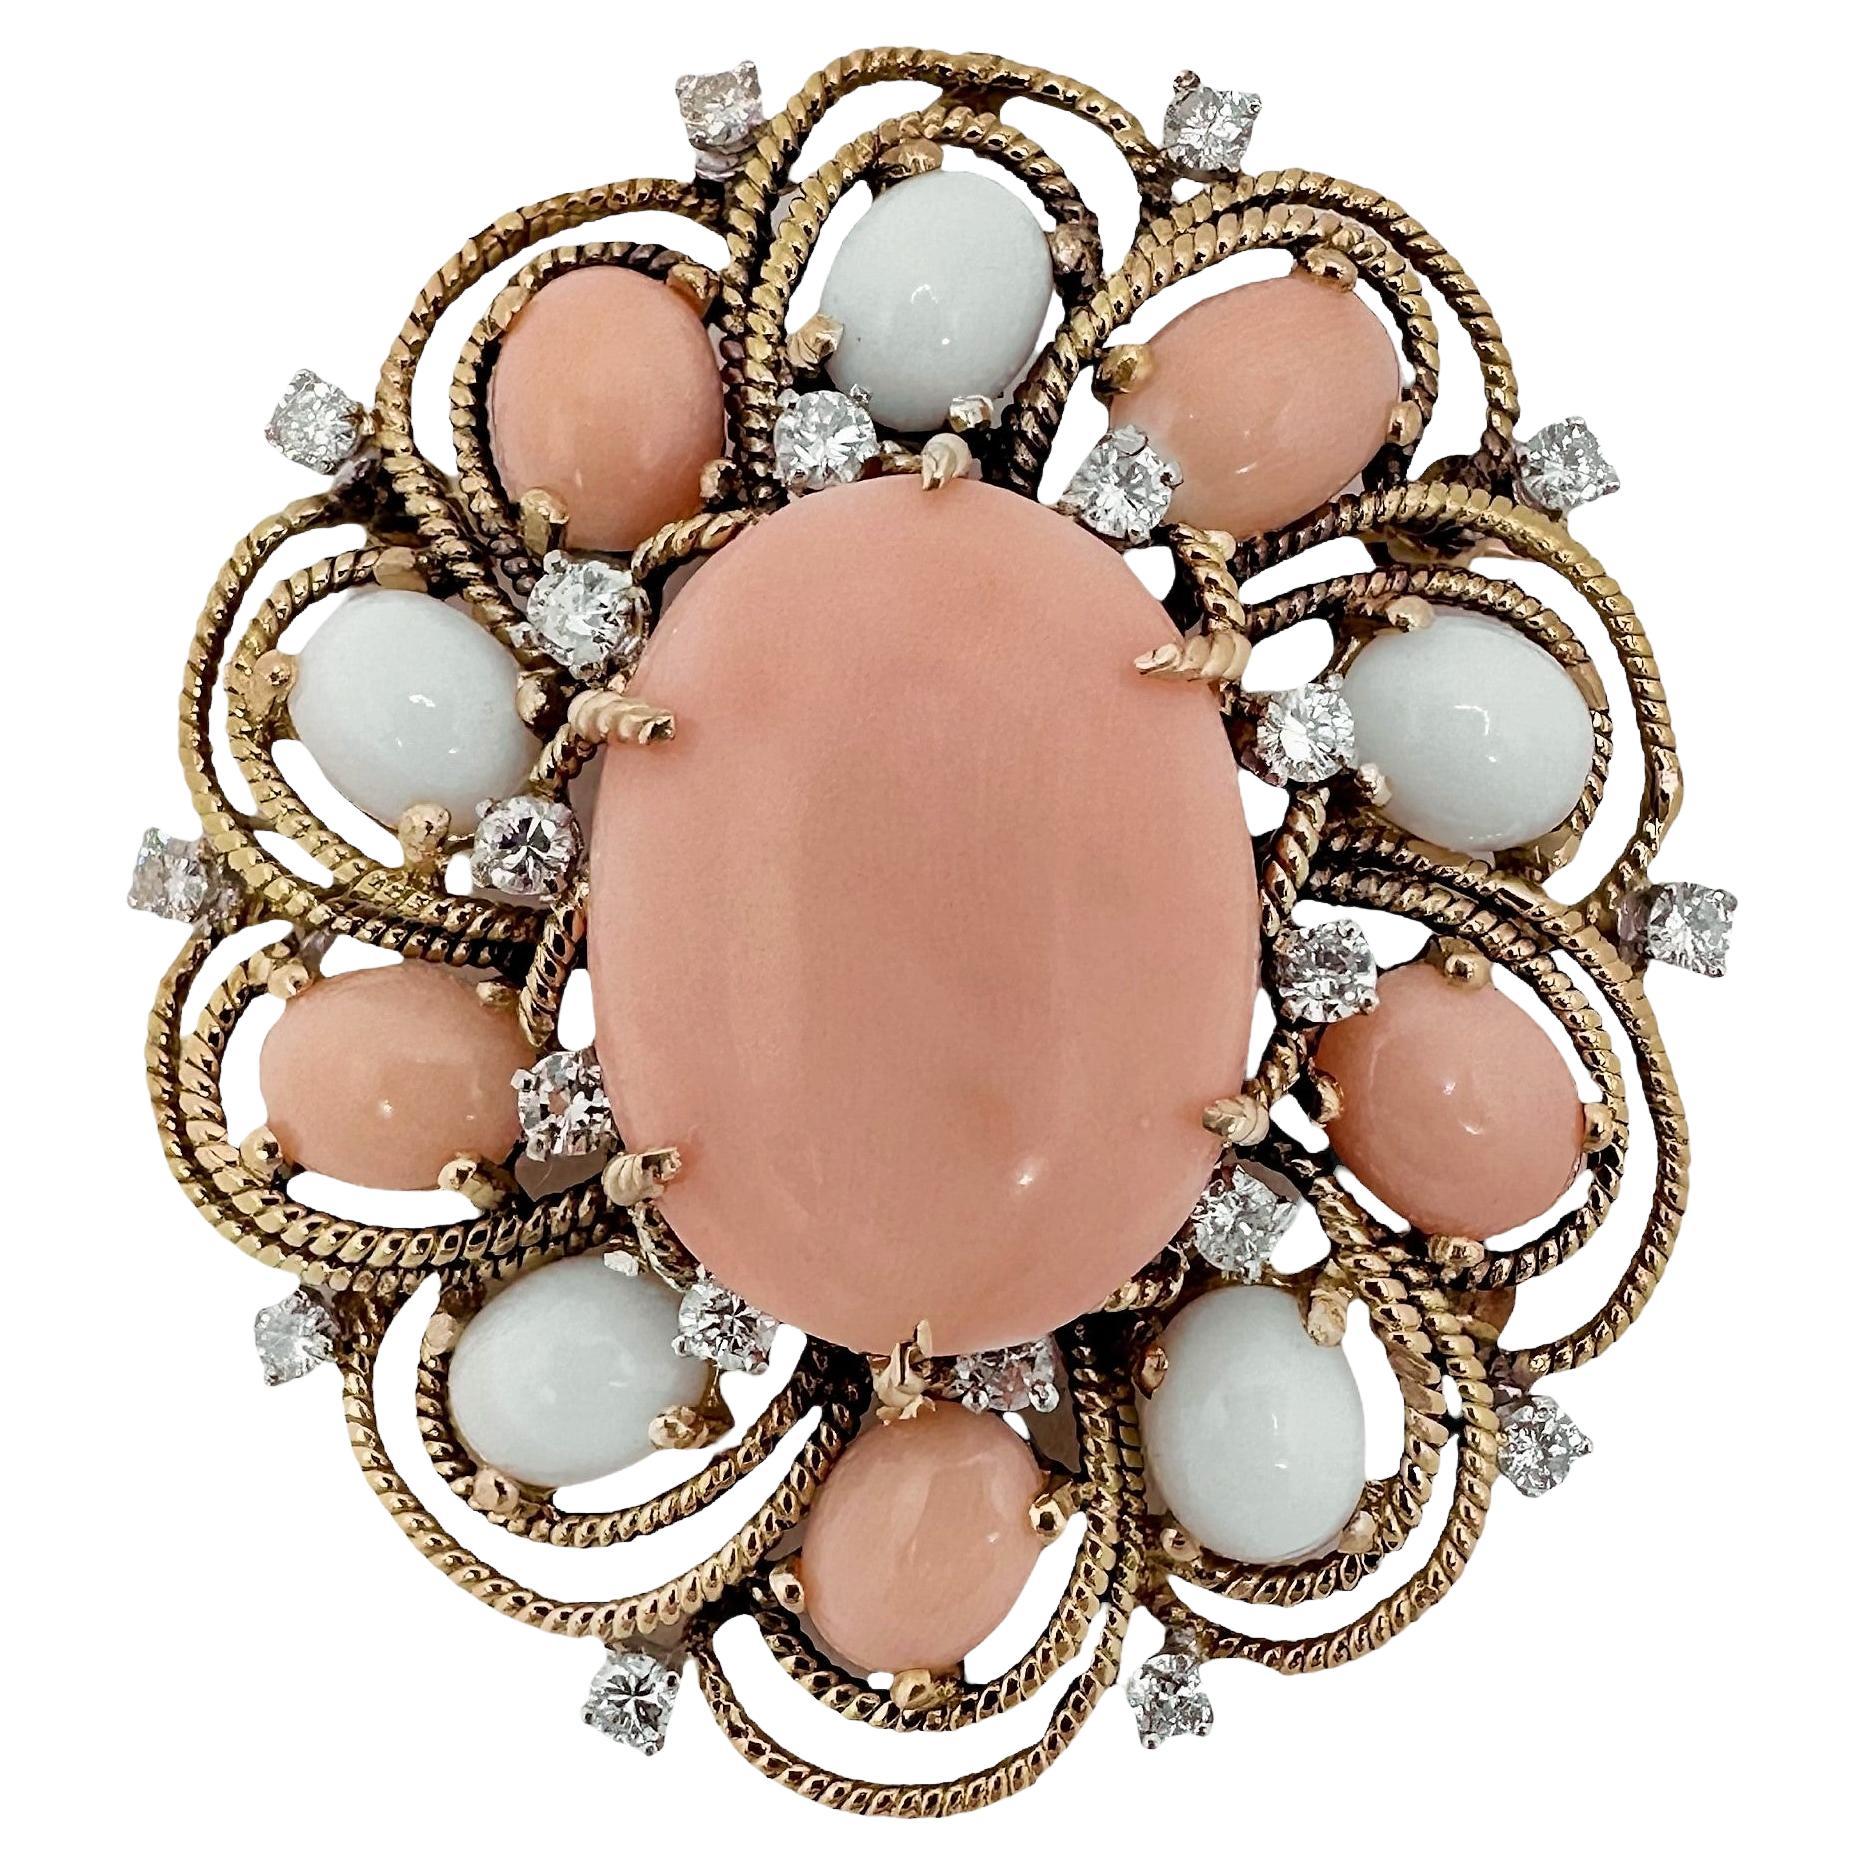 Elegant Brooch/Pendant in 18k Gold, Angel Skin Coral, White Onyx and Diamonds